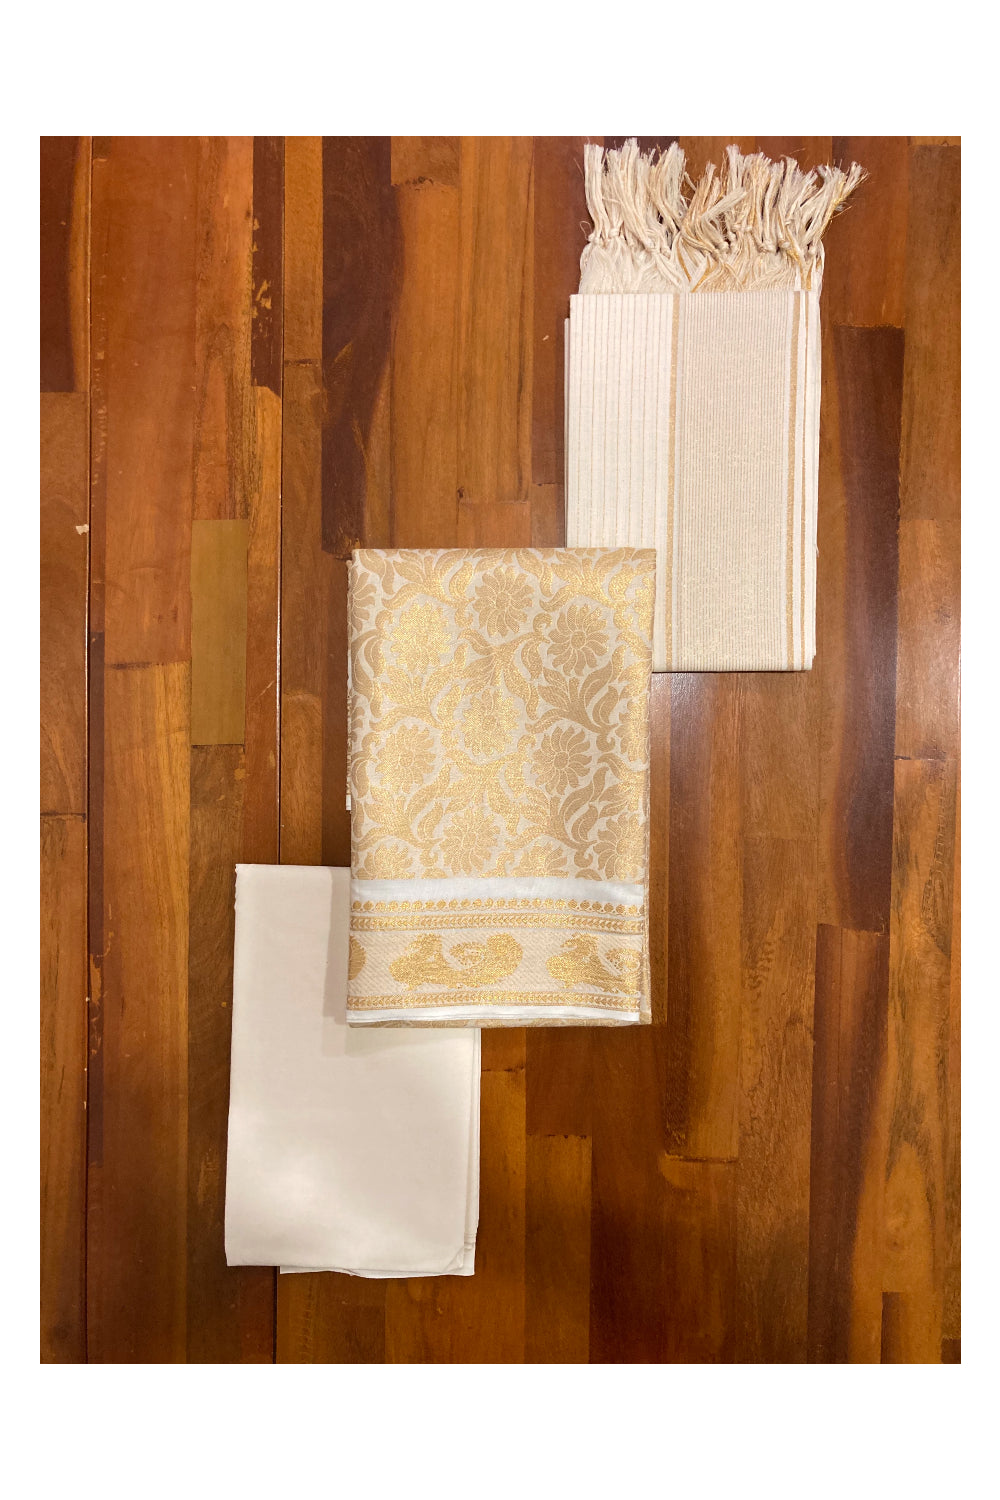 Kerala Cotton Churidar Salwar Material with Kasavu Woven Design (include Lines Shawl / Dupatta)